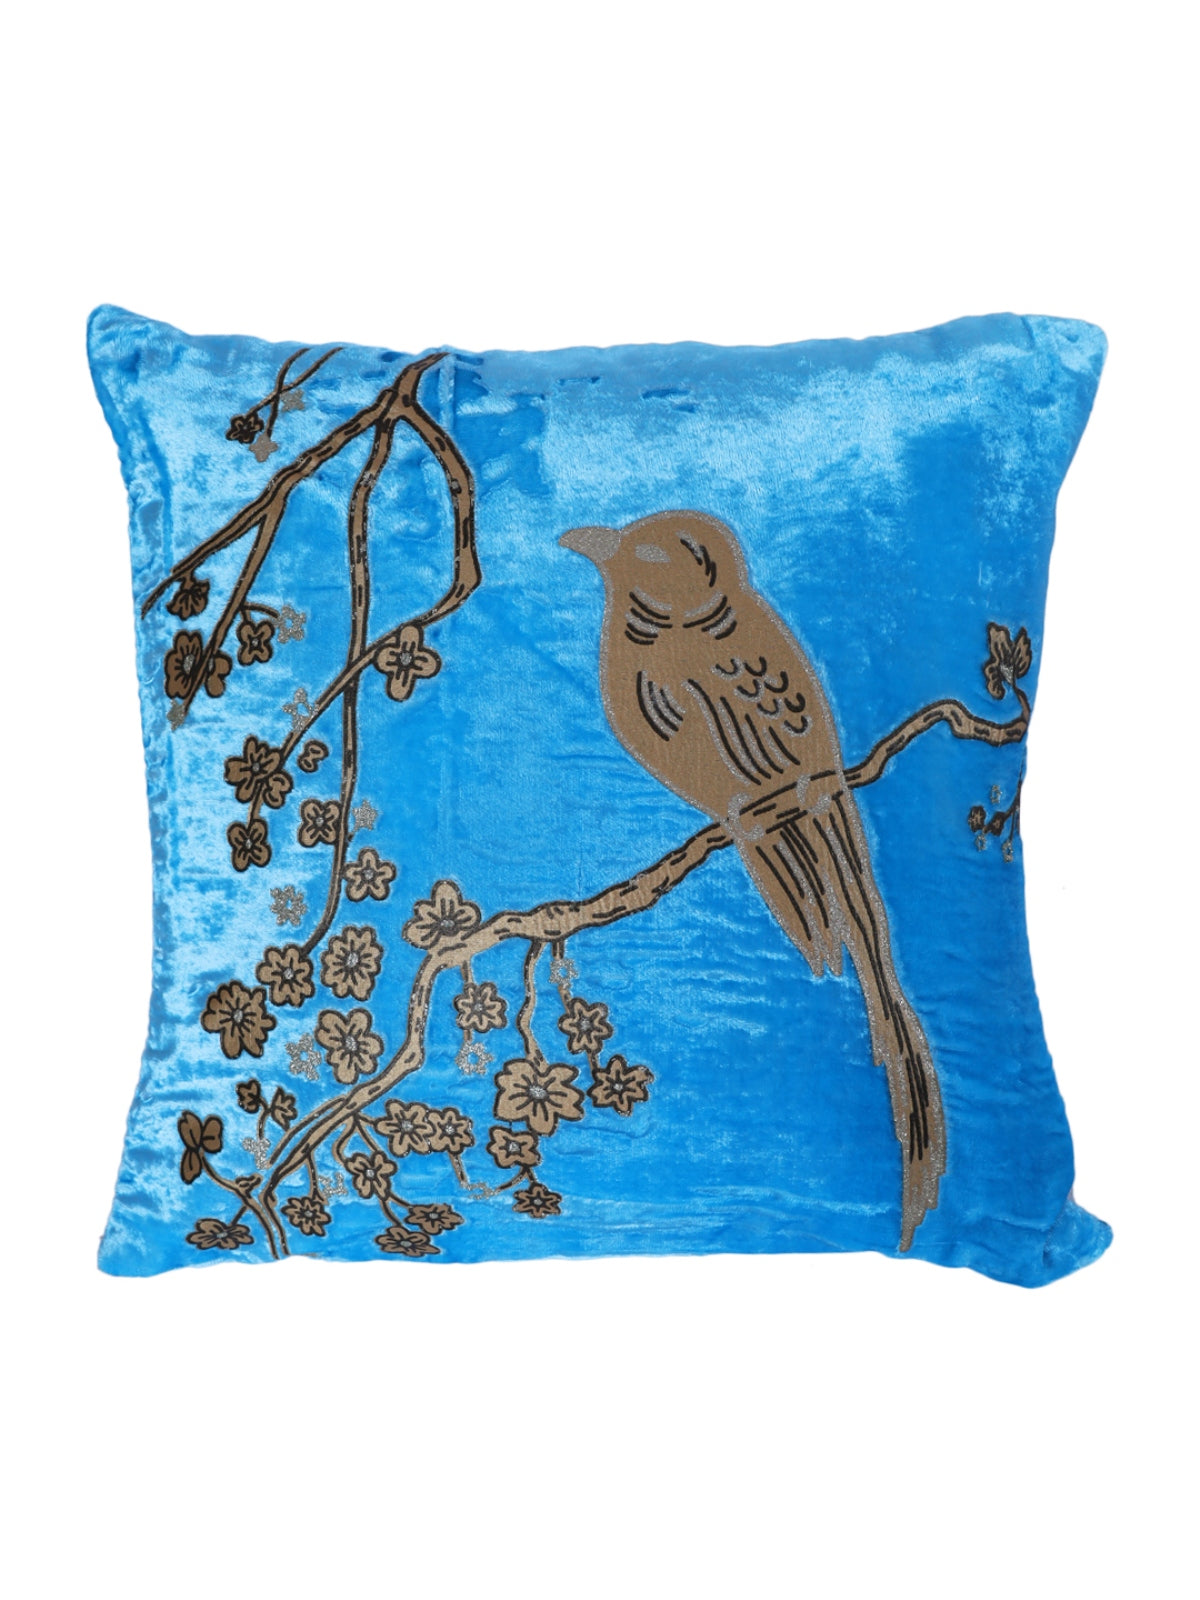 Velvet Floral & Bird Designer Cushion Cover 16x16 Inche, Set of 5 - Turquoise Blue